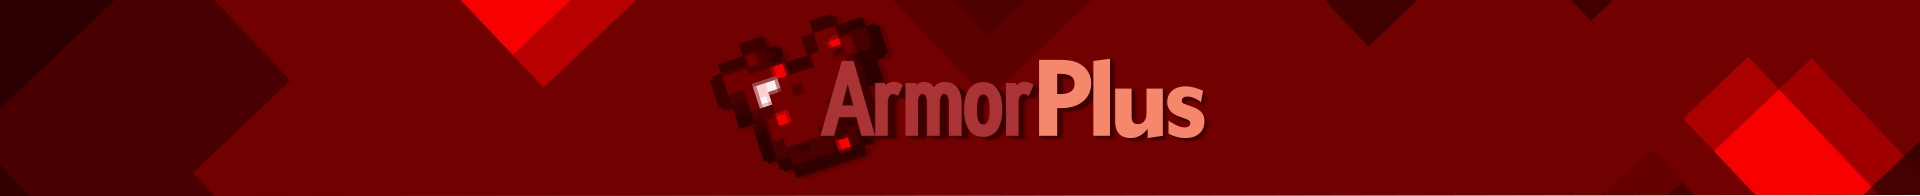 ArmorPlus Banner-Logo